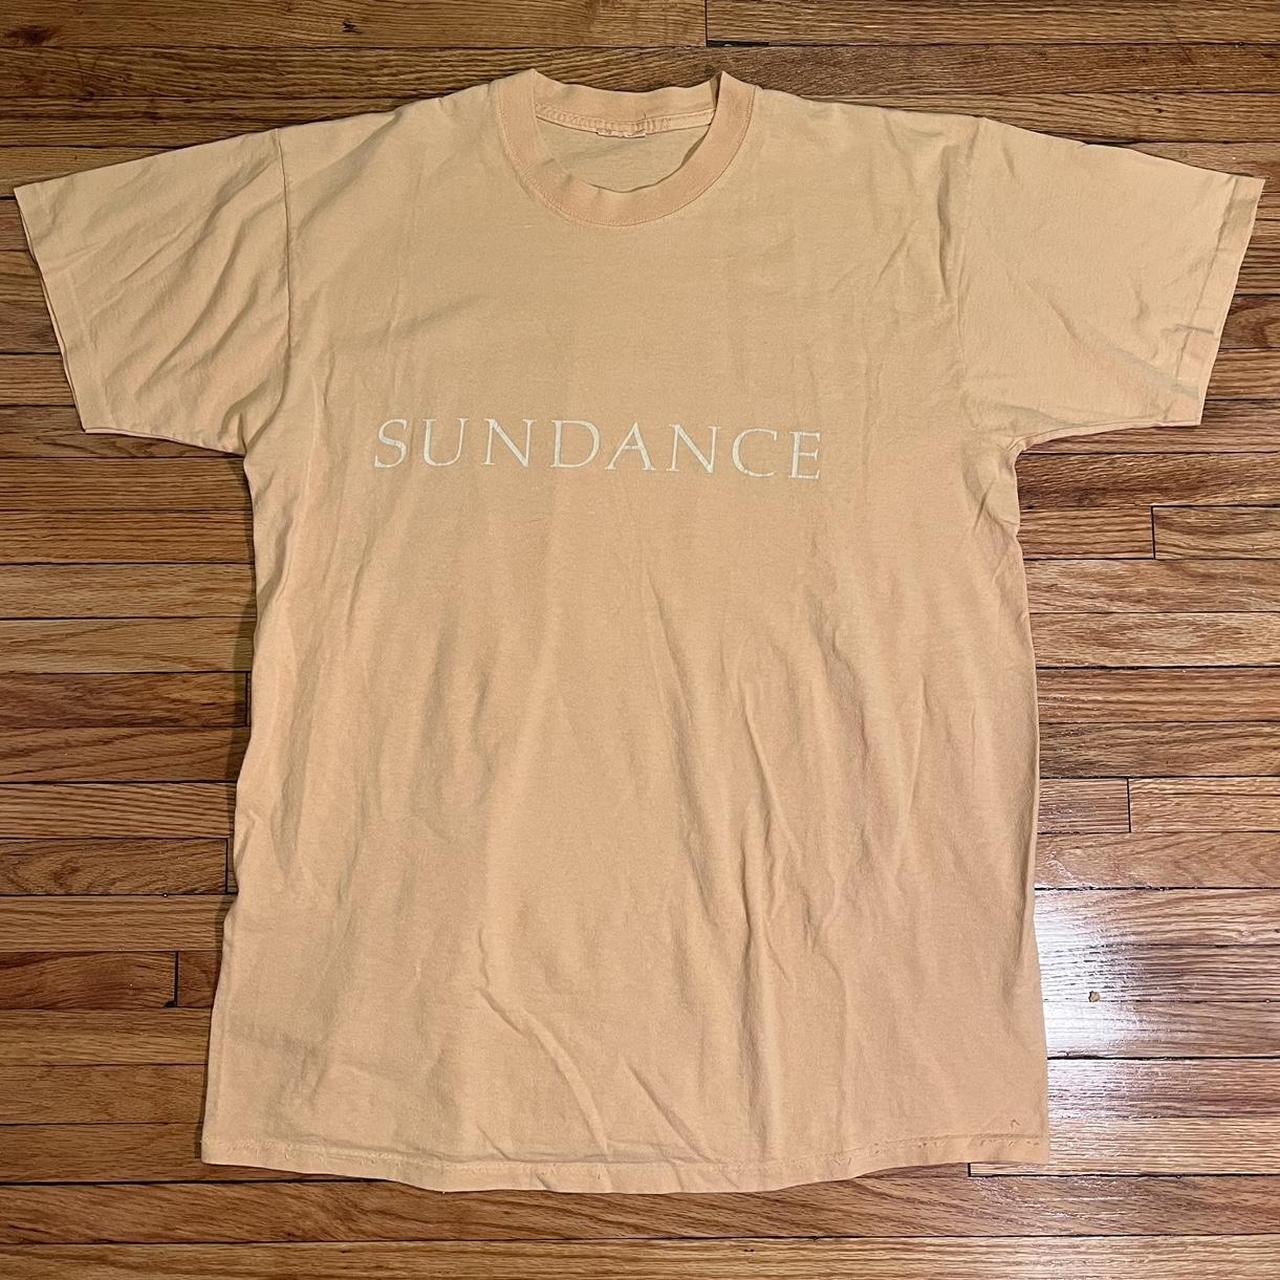 80s/90s vintage Sundance film festival ? shirt... - Depop